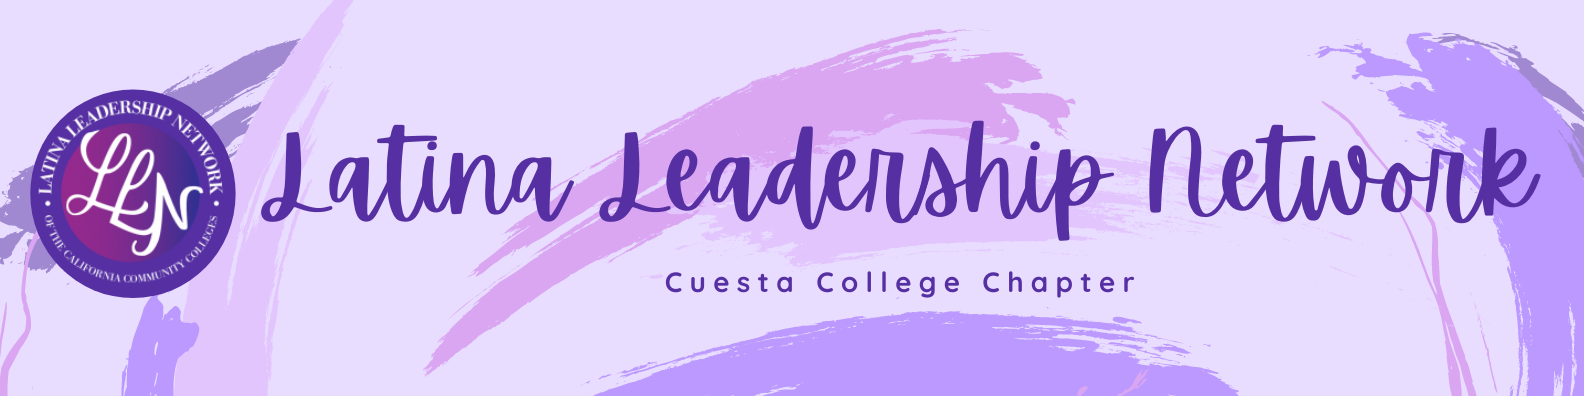 Latina Leadership Network, Cuesta College Chapter